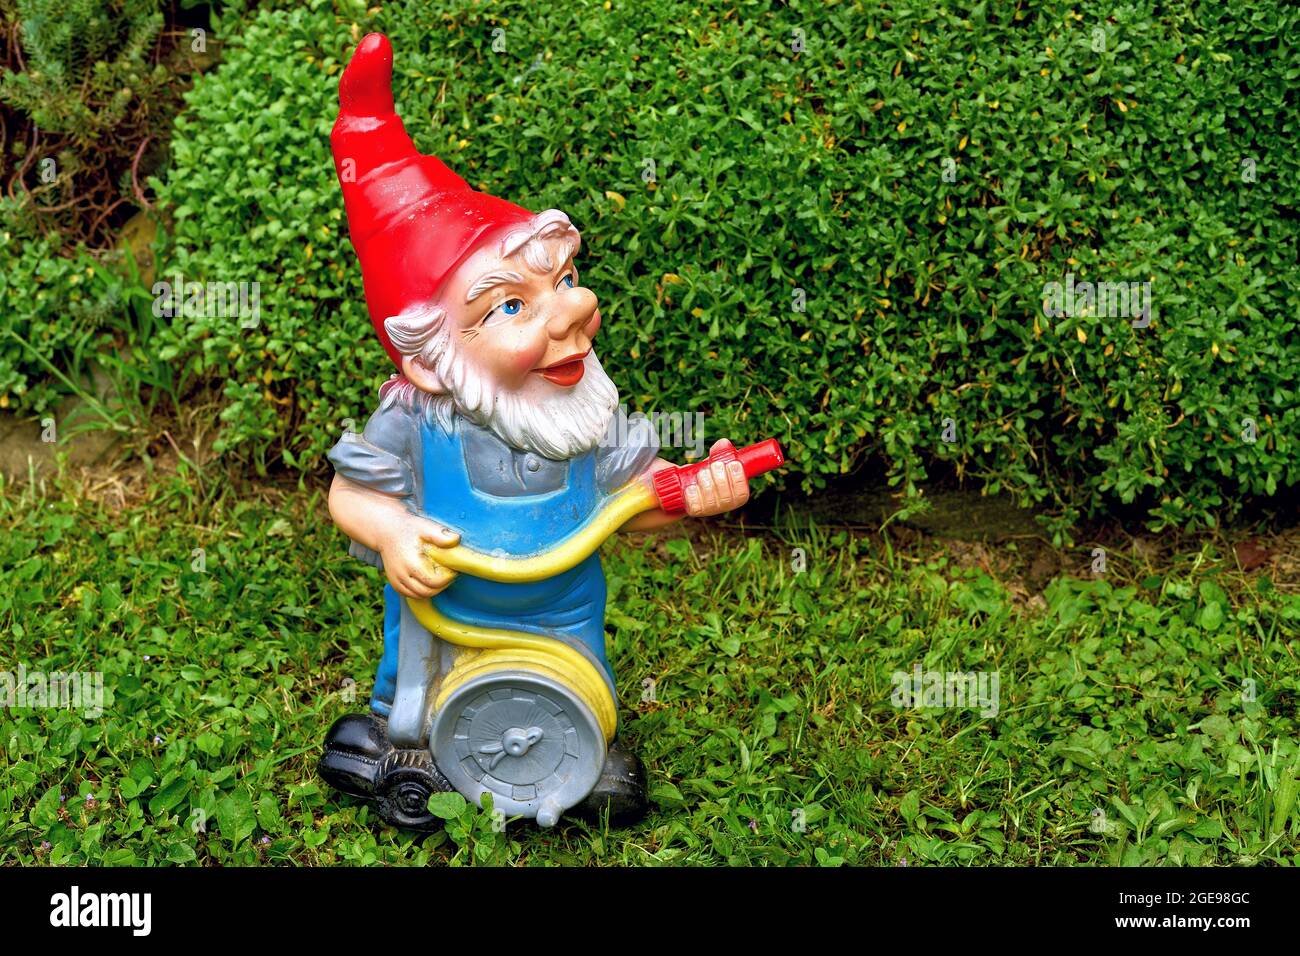 Garden gnome with a water hose reel in home garden Stock Photo